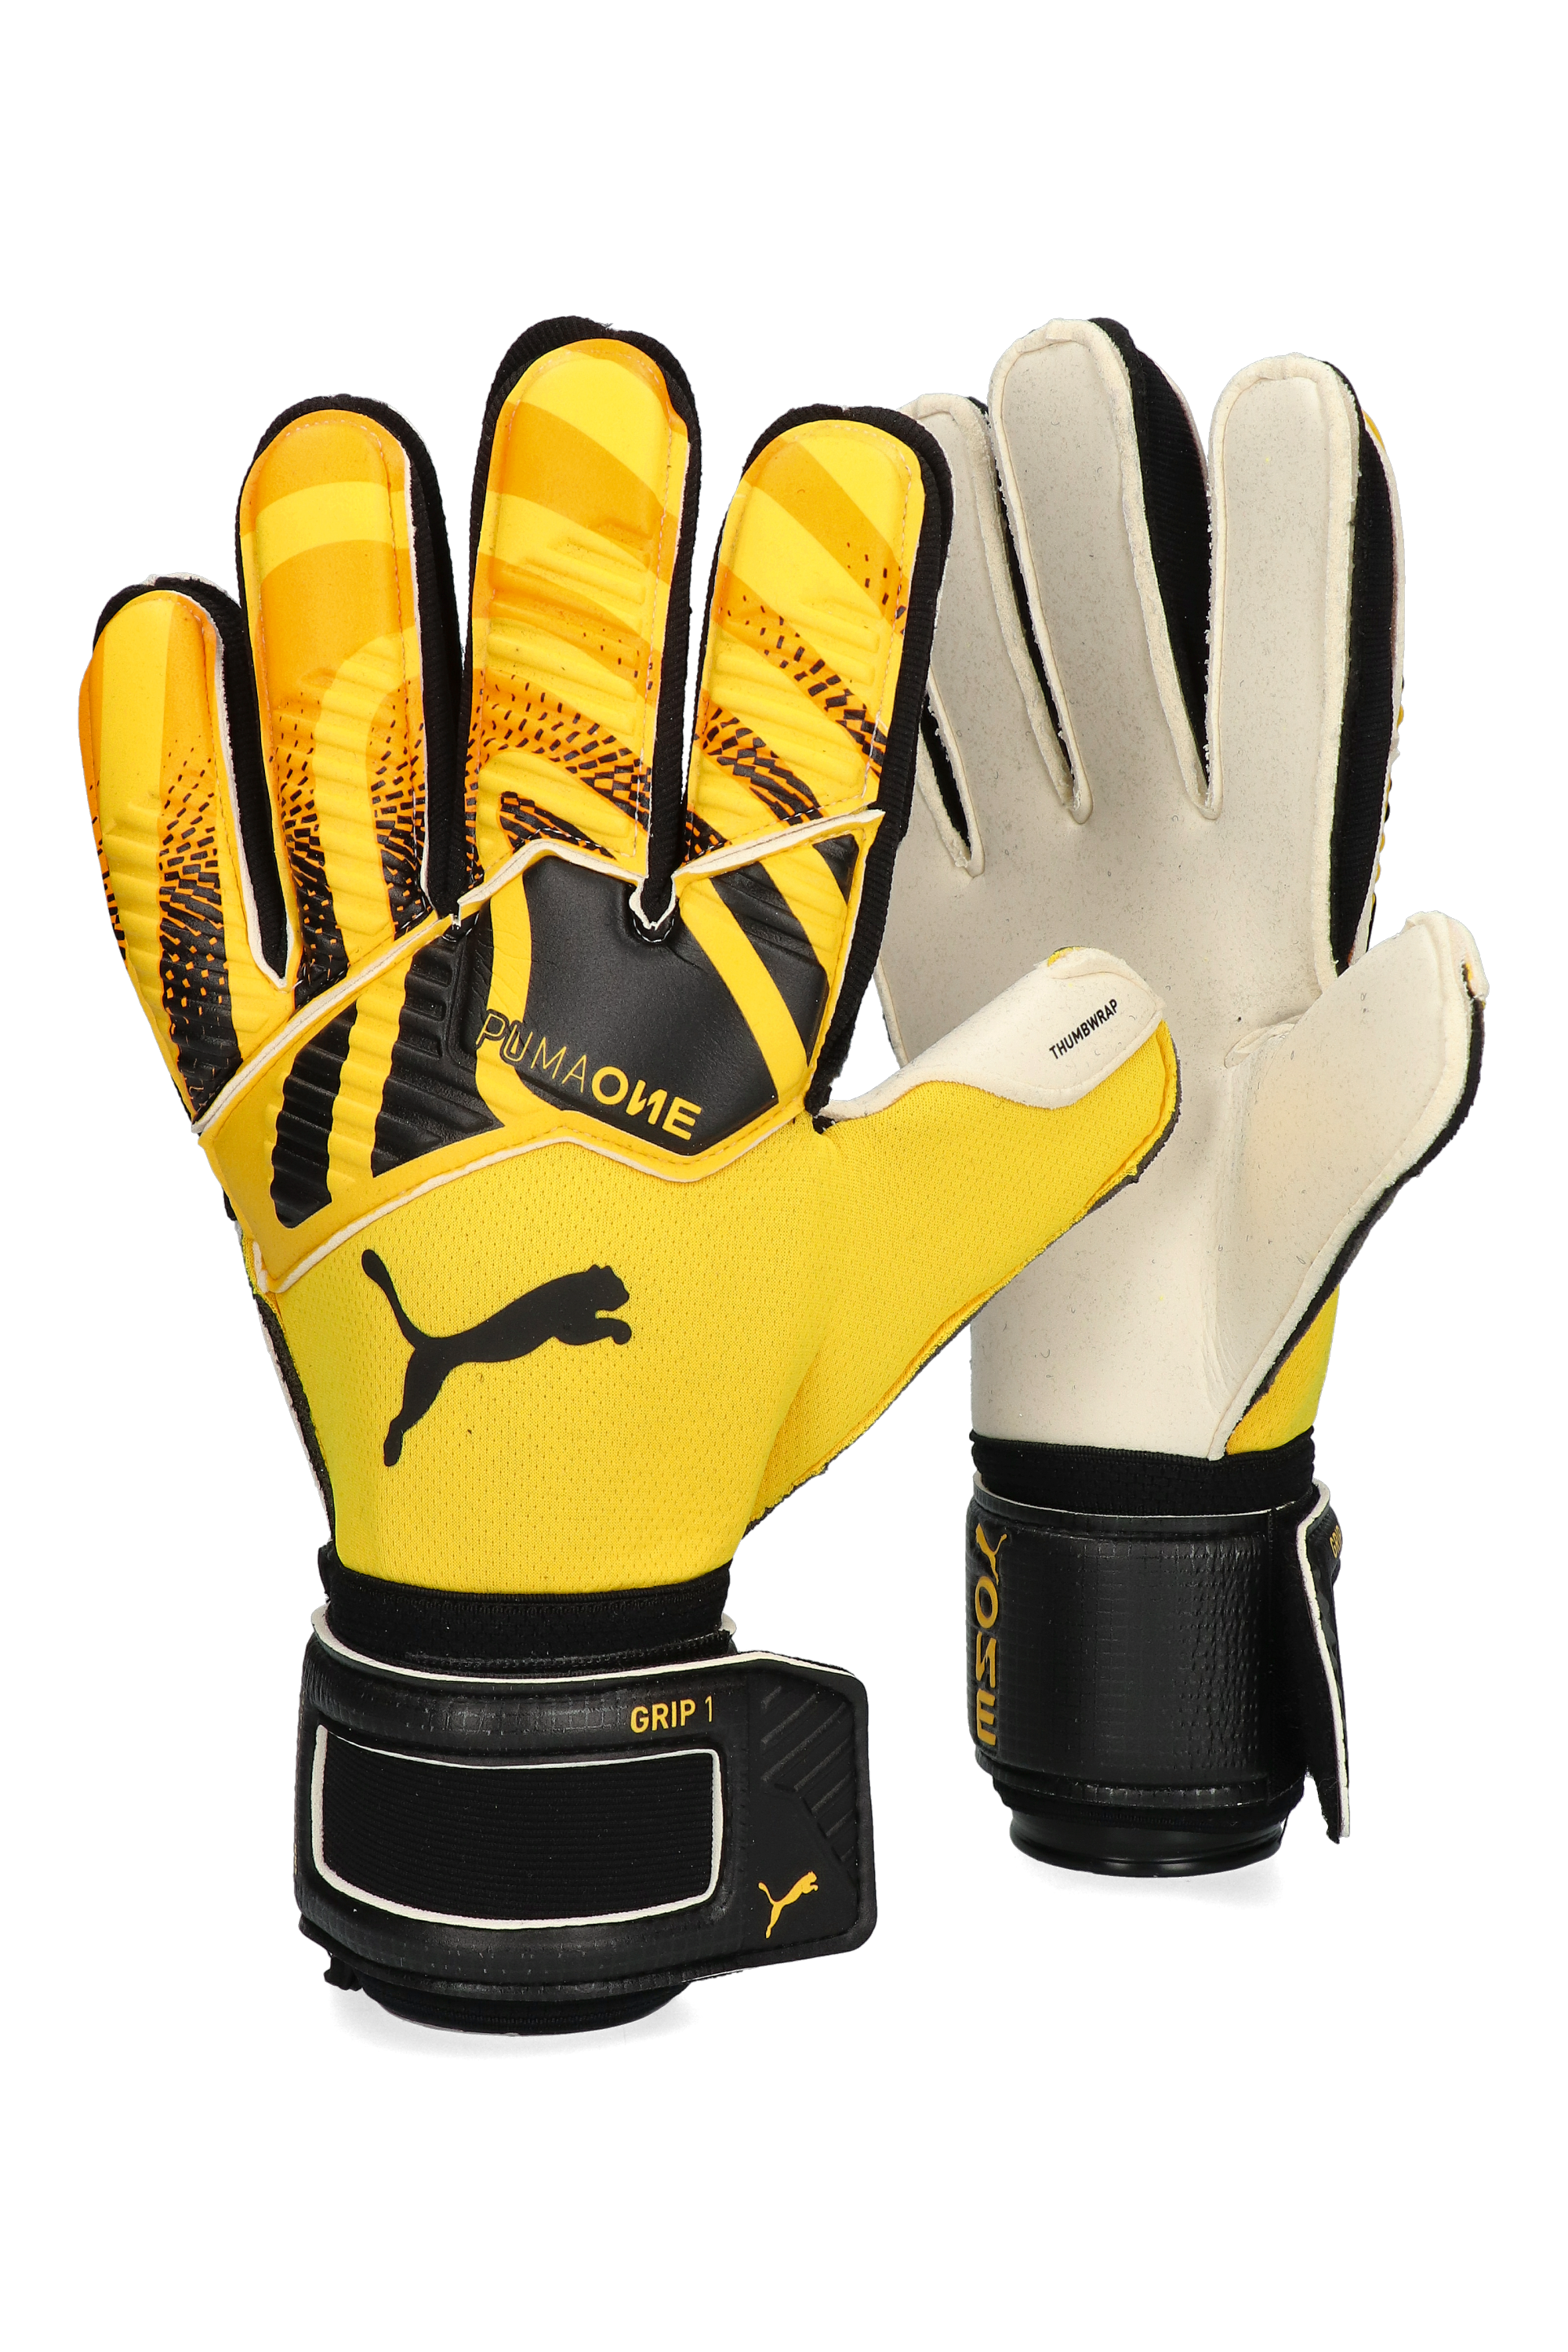 Goalkeeper gloves Puma One 1 | R-GOL.com - Football & equipment